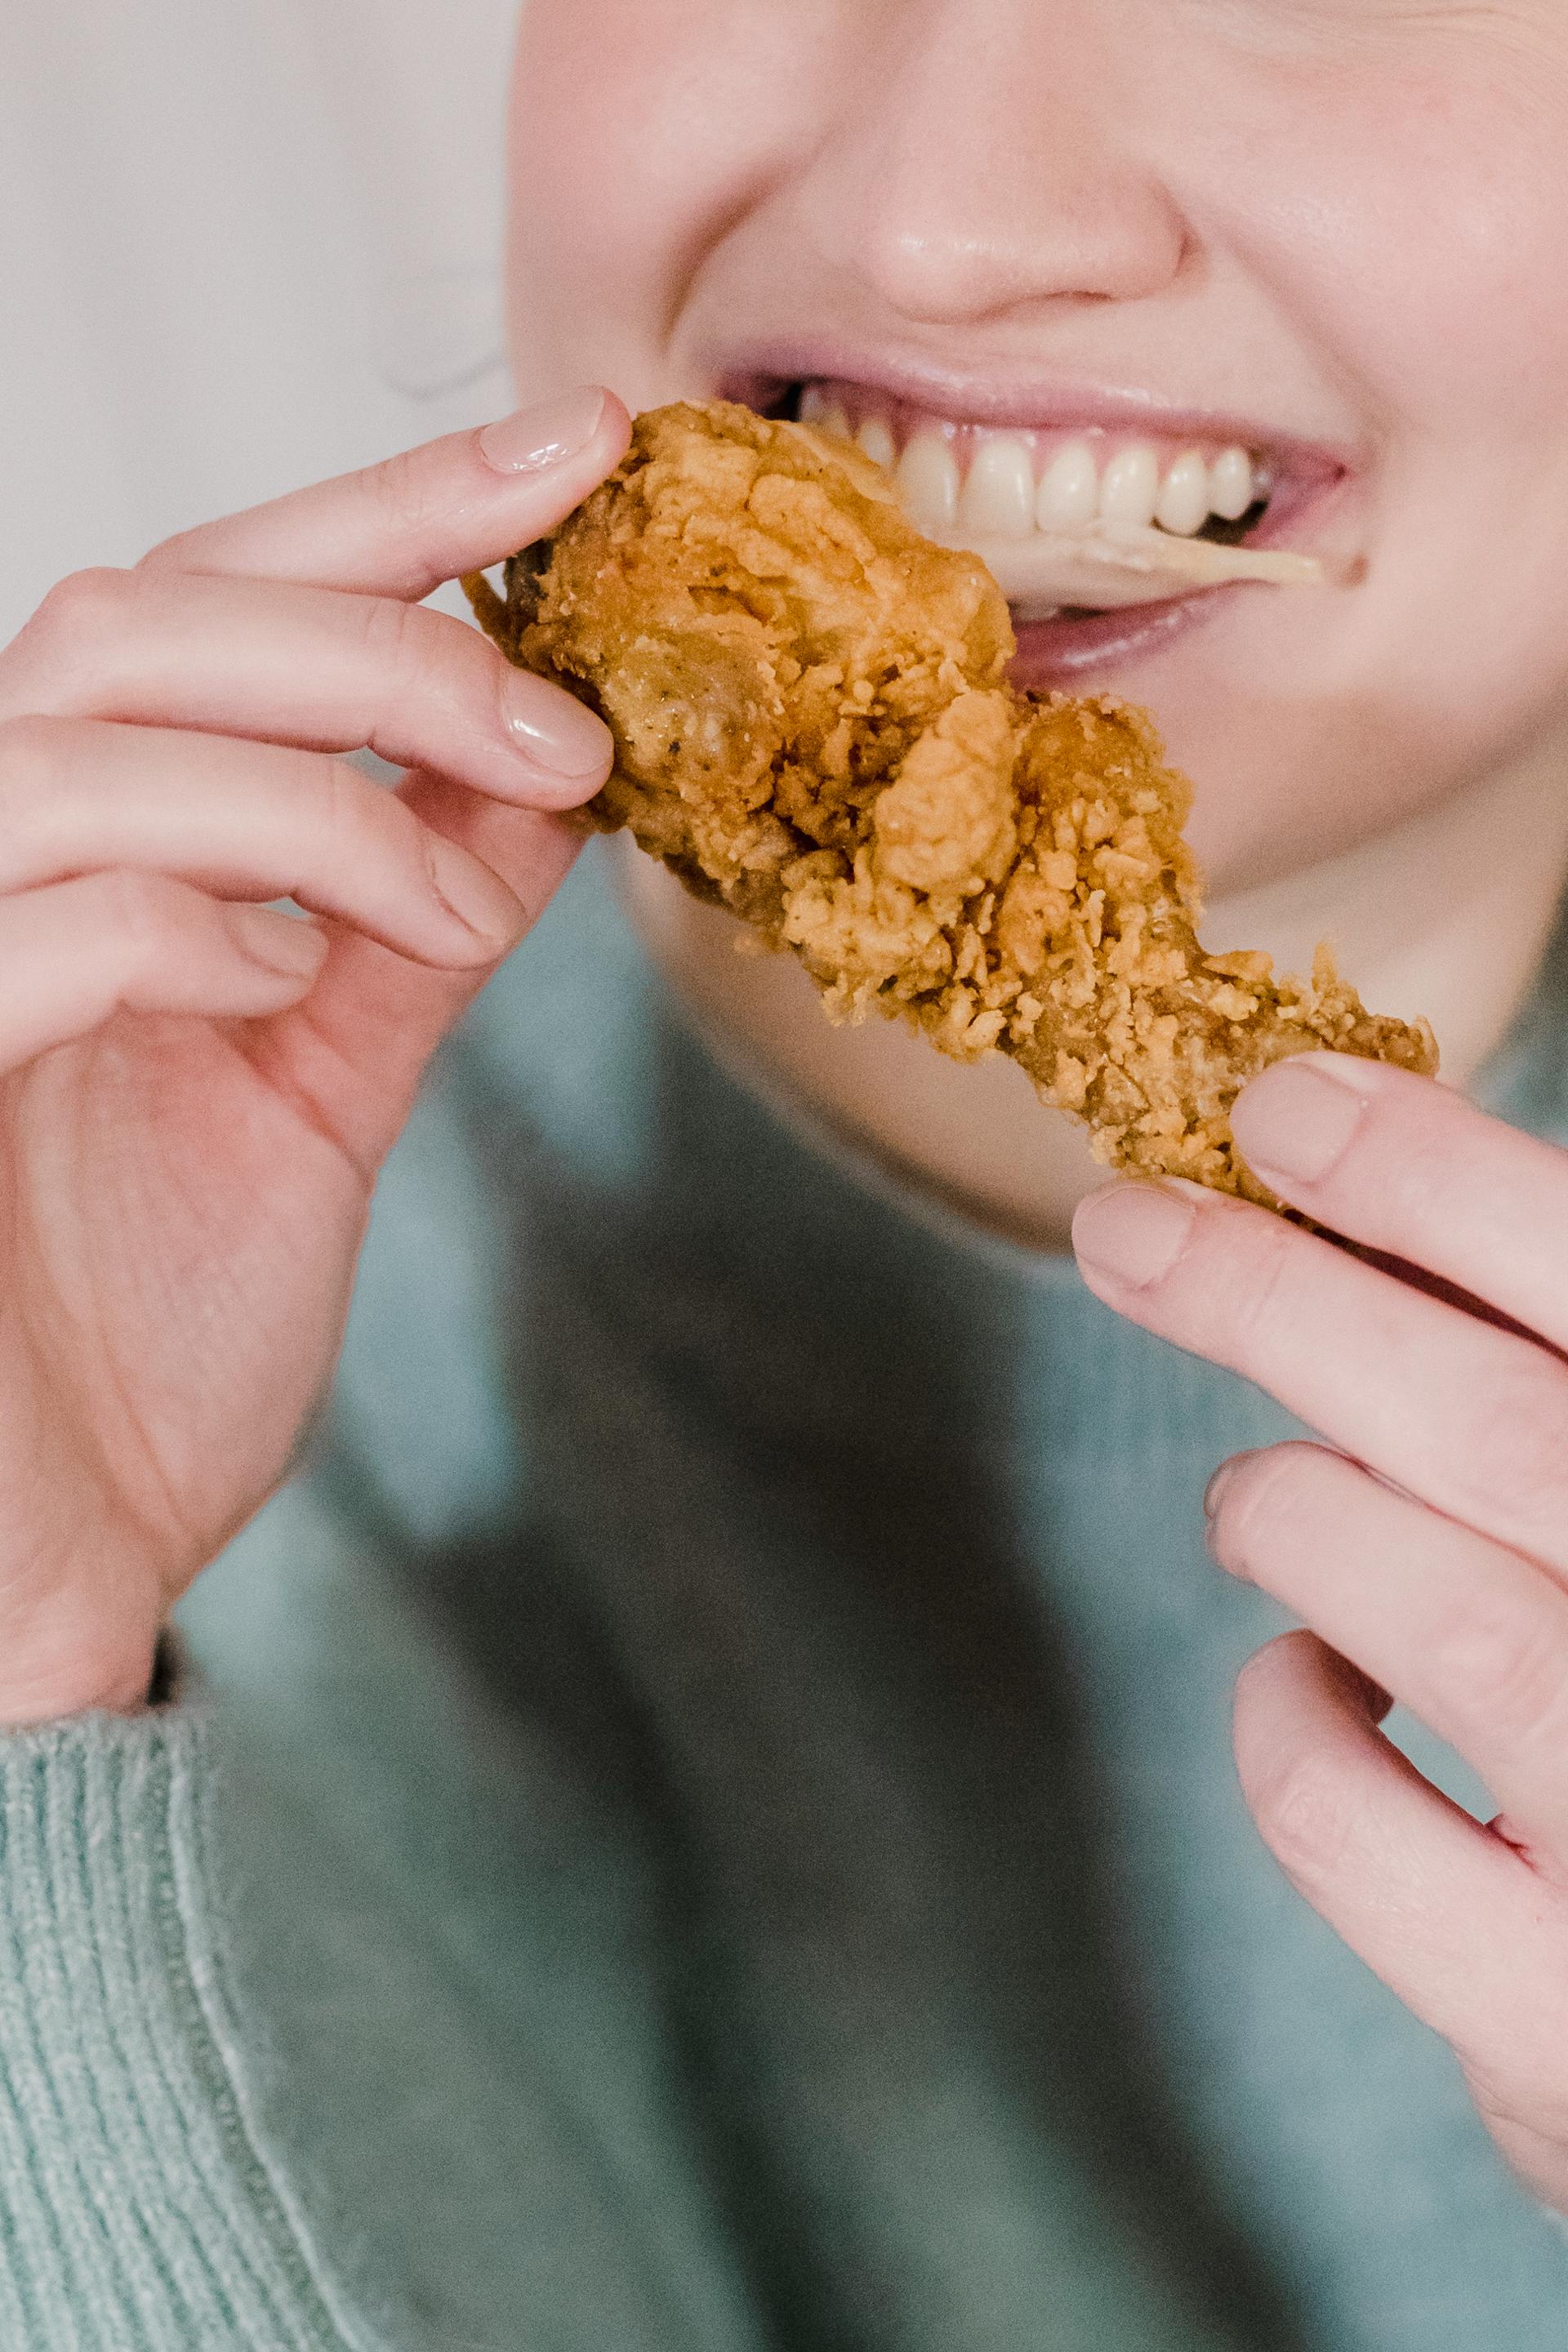 Una persona comiendo pollo frito | Fuente: Pexels